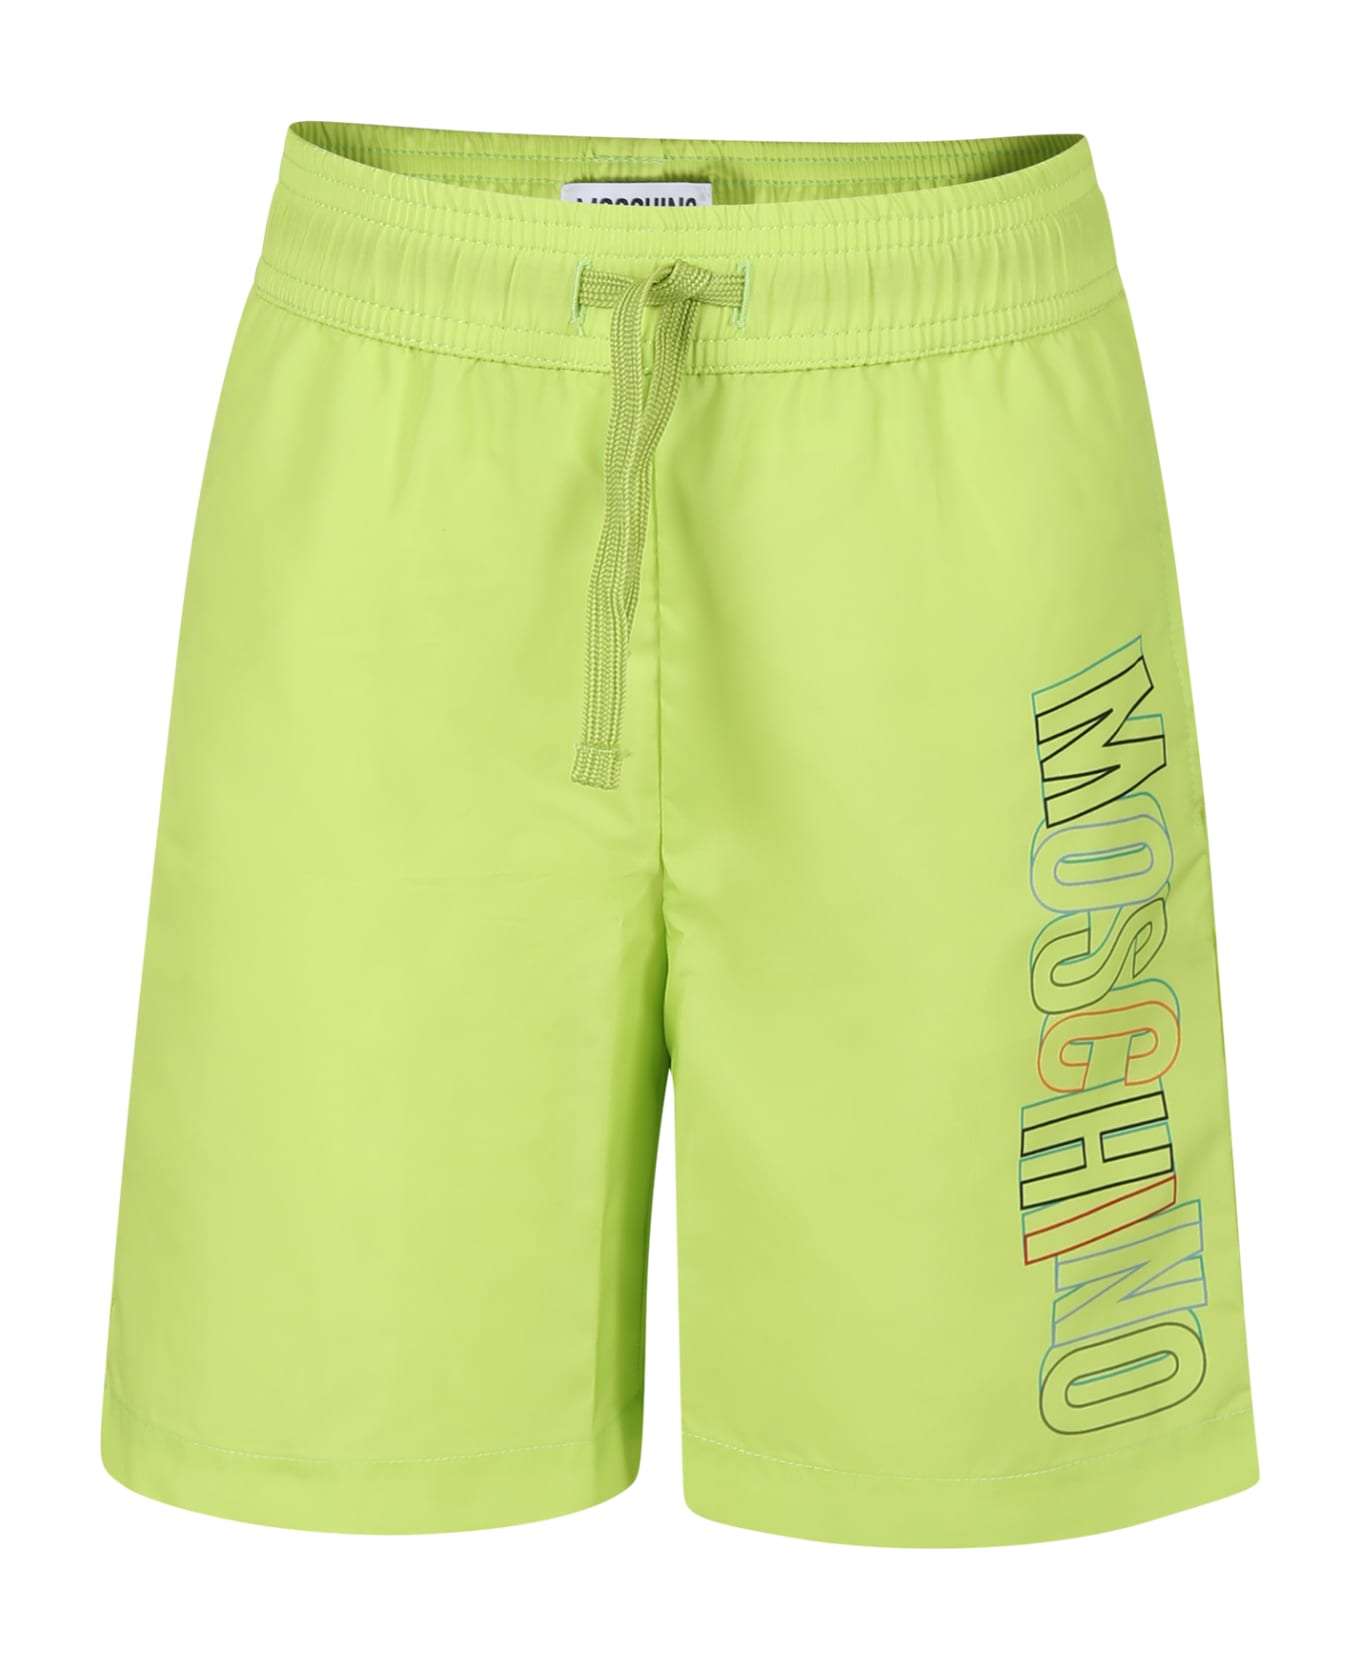 Moschino Yellow Swim Shorts For Boy With Logo - Yellow